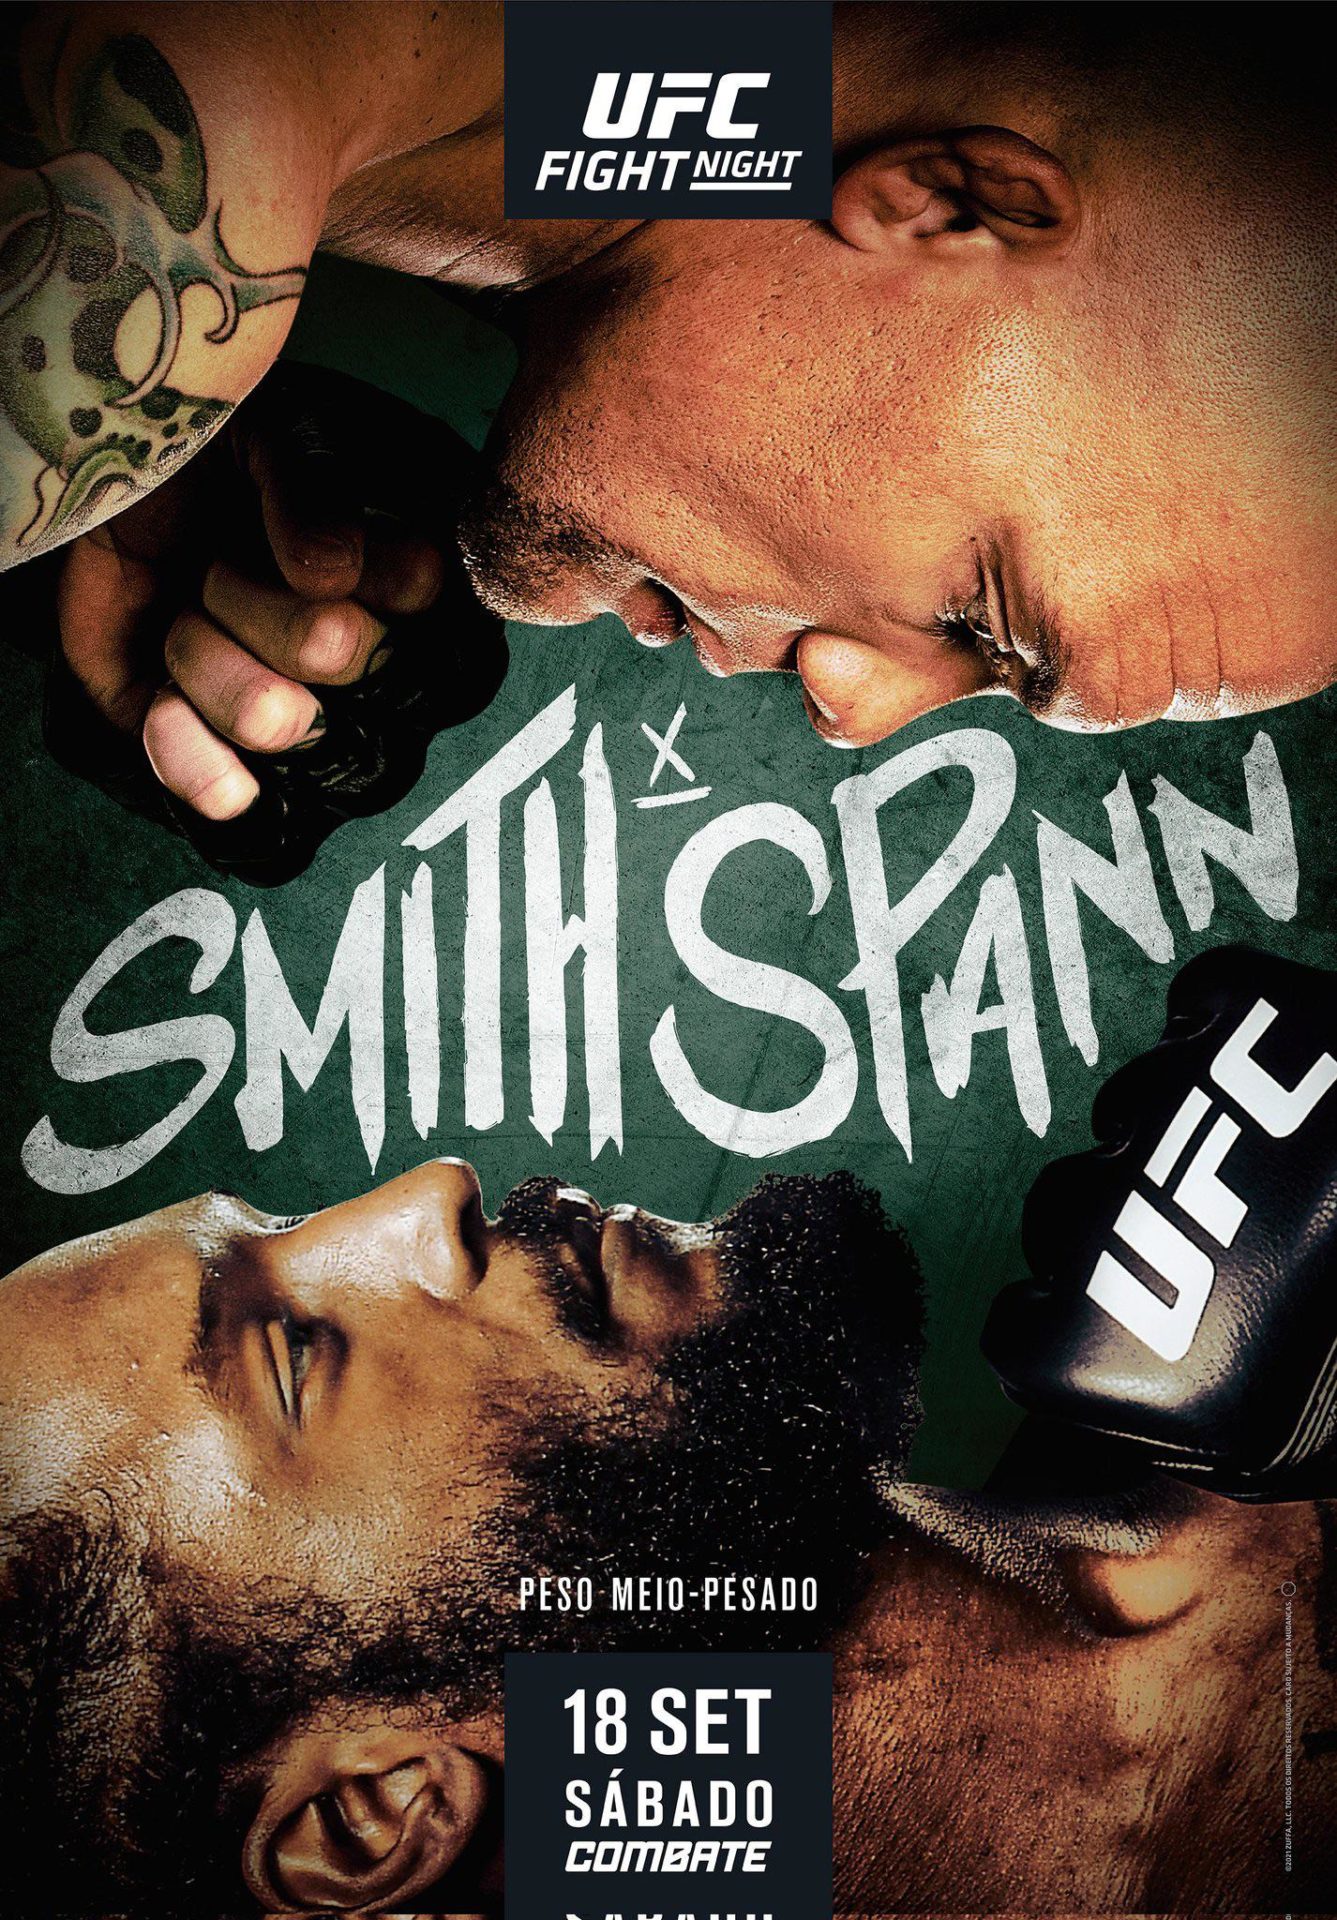 UFC Fight Night - Smith vs Spann